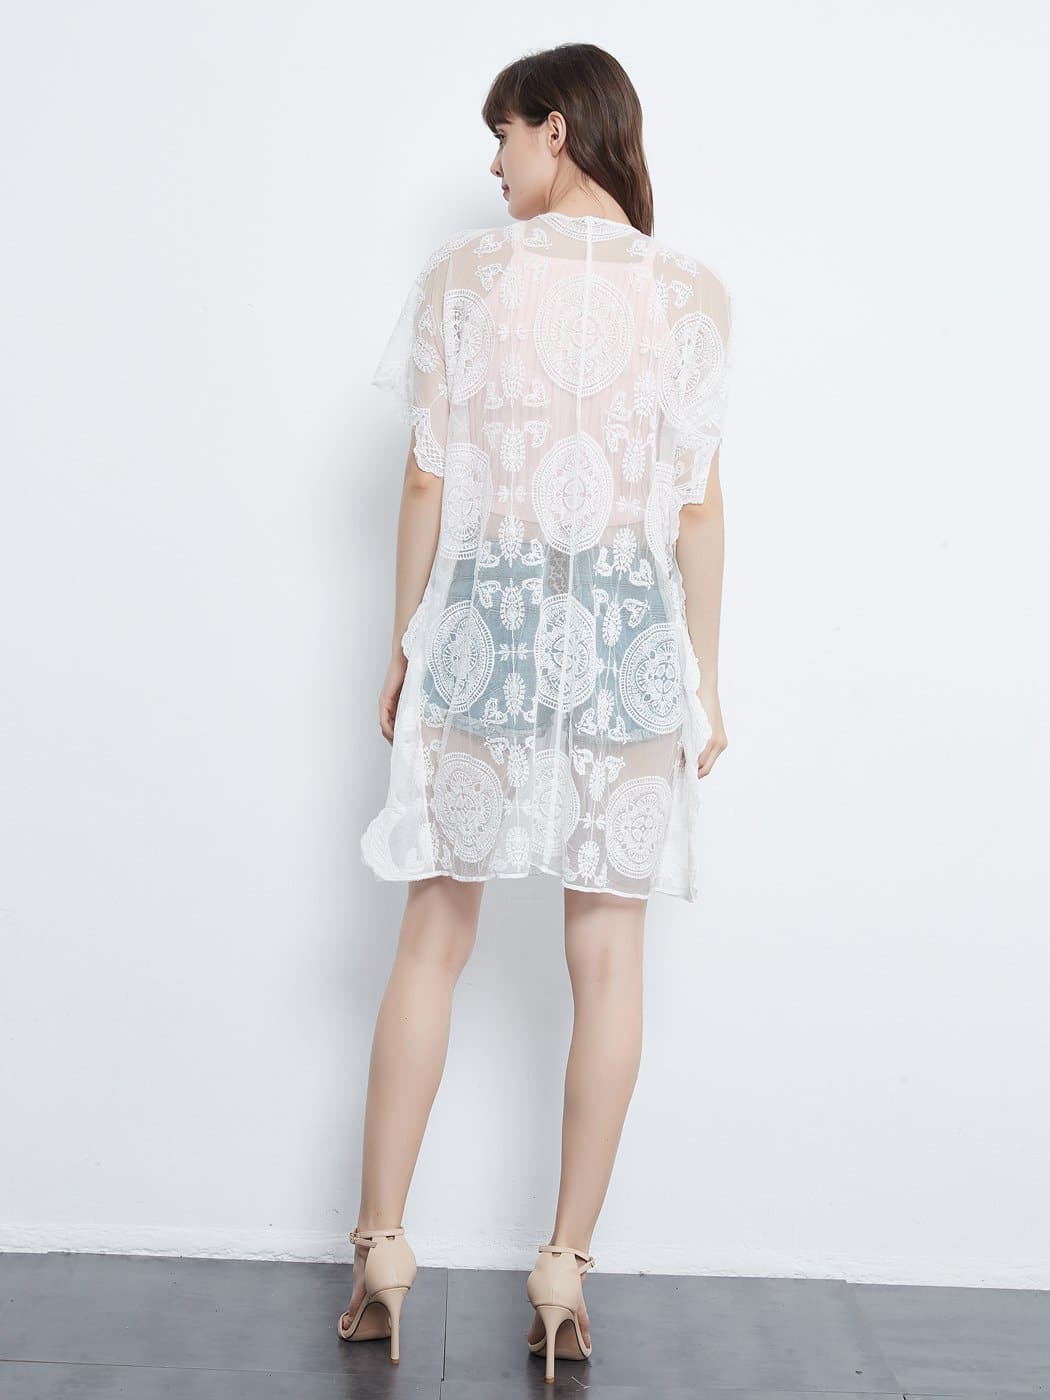 Anna-Kaci Embroidered Mesh Sheer Midi Dress| Womens | Anna-Kaci